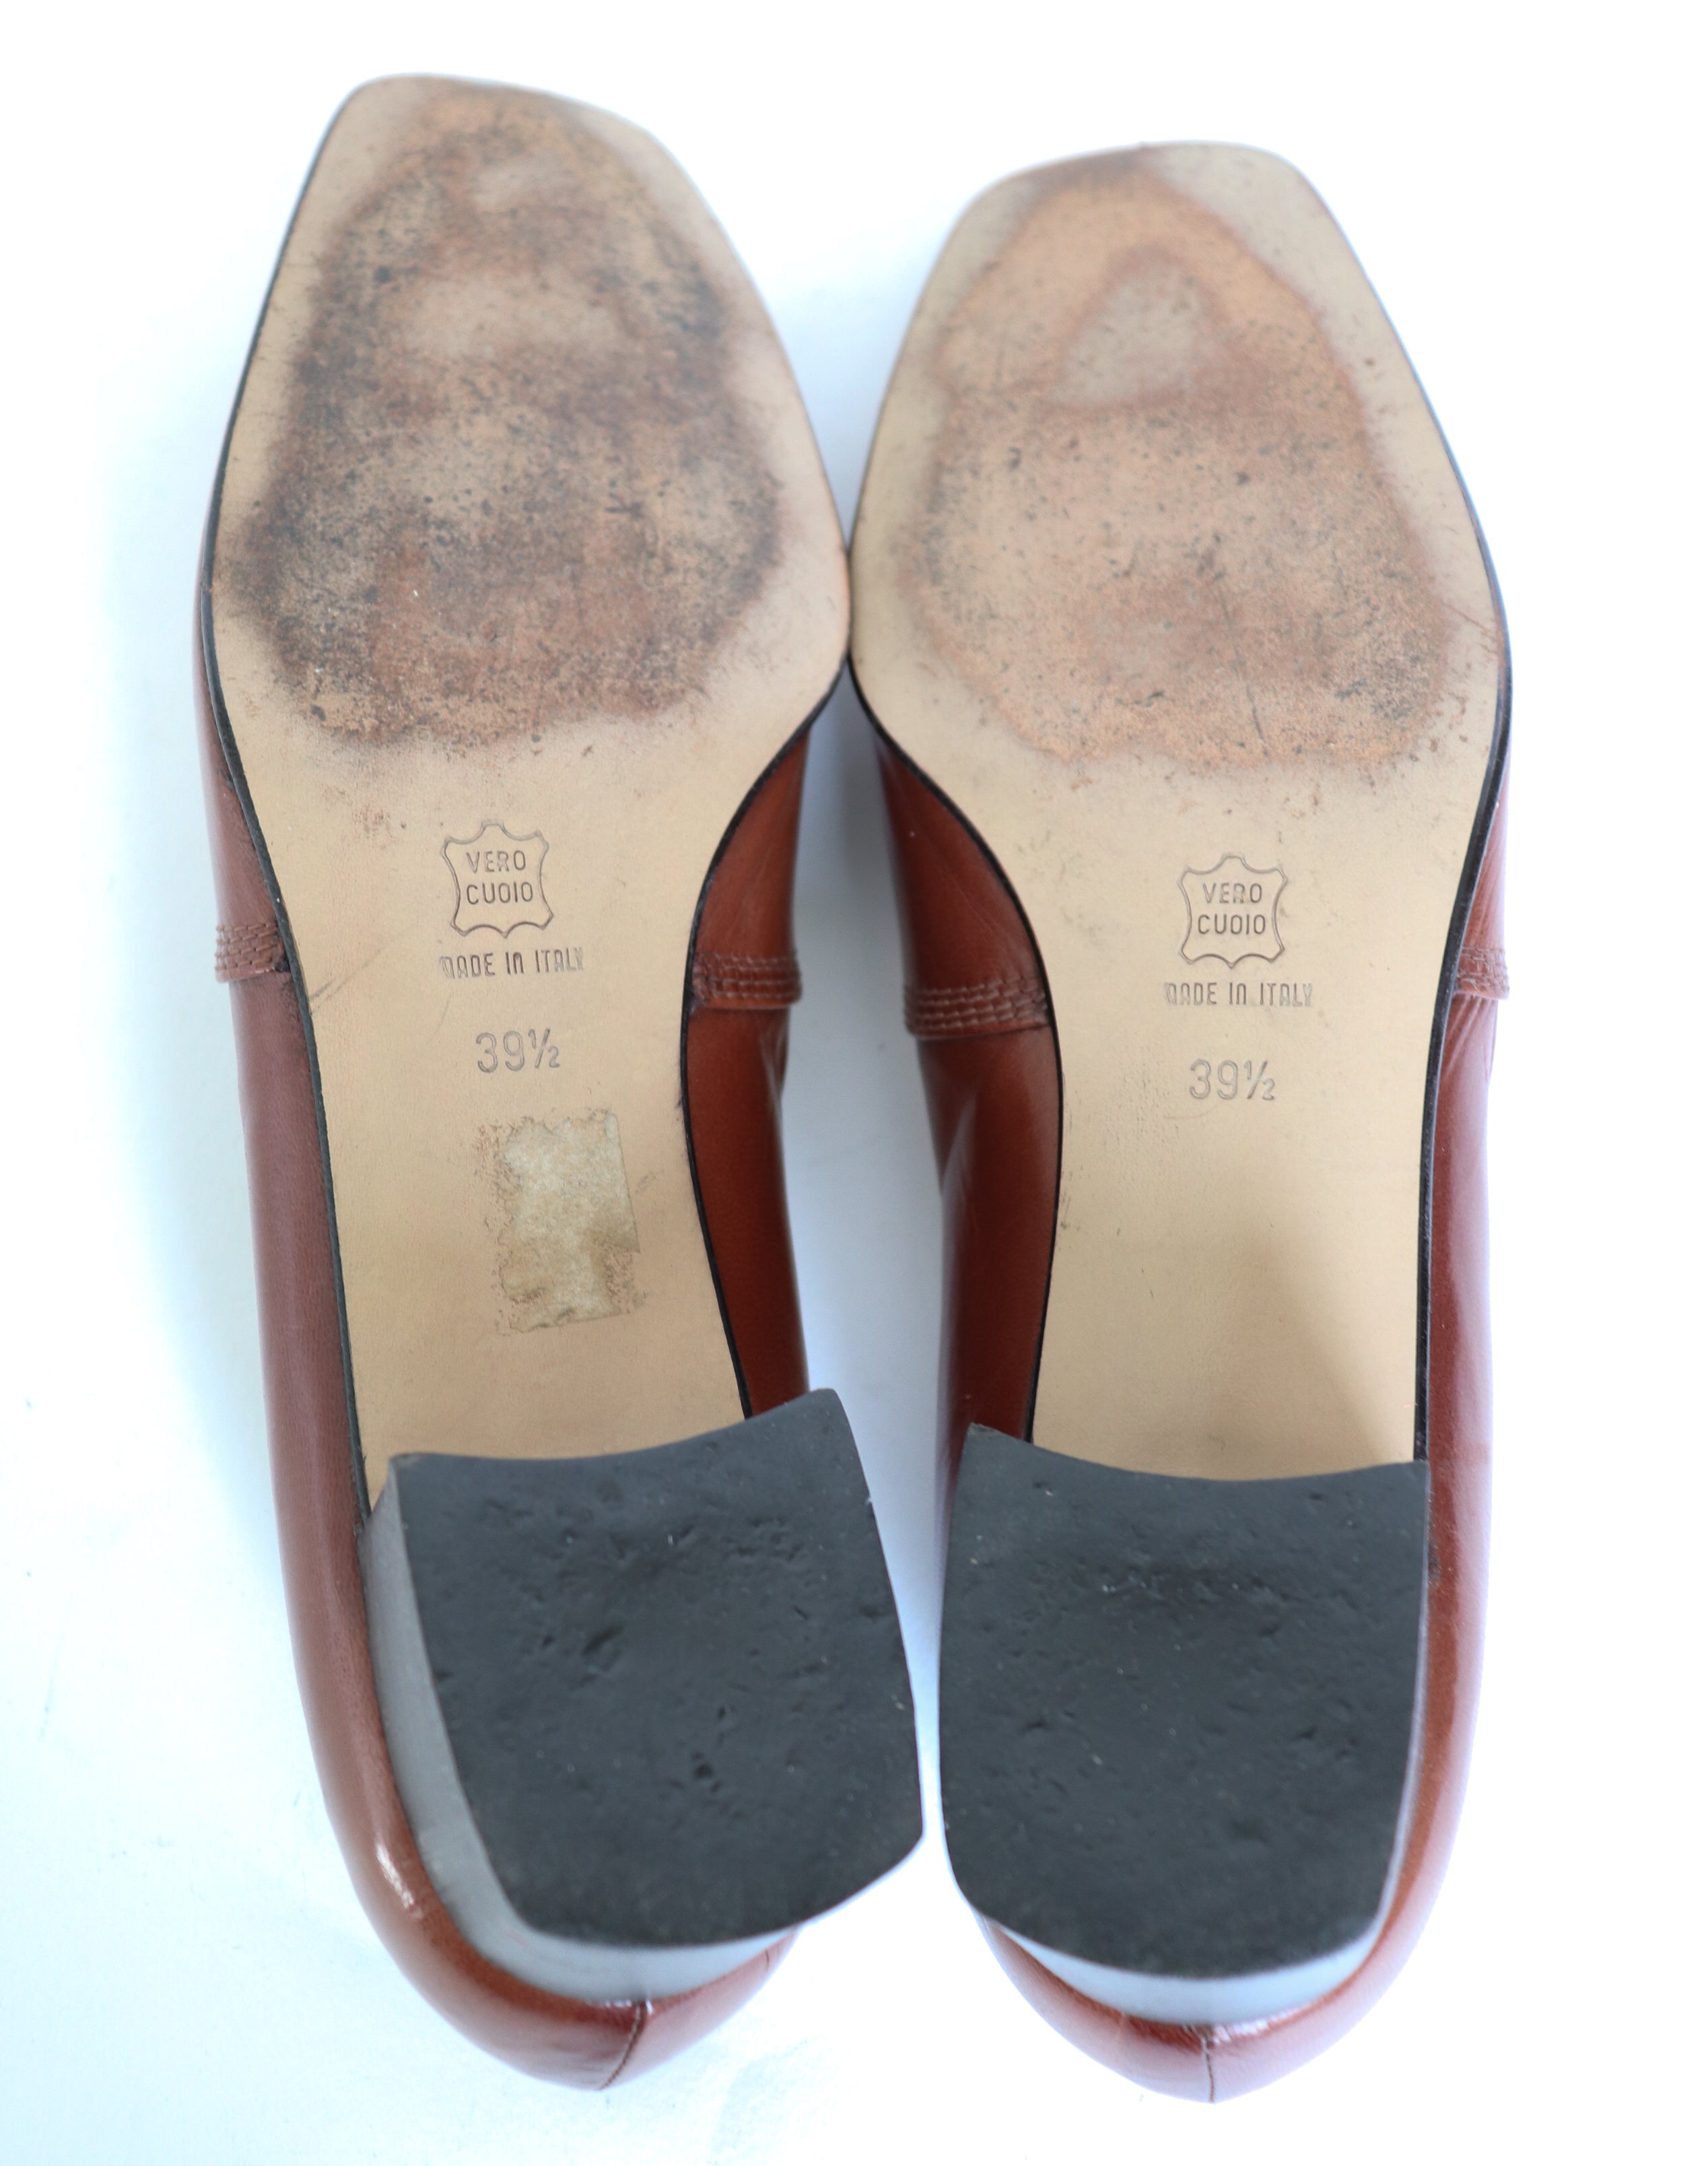 Vintage Mid Heel Loafers / Pumps - Brown Leather - NICOL - Fit Narrow 39 / UK 6